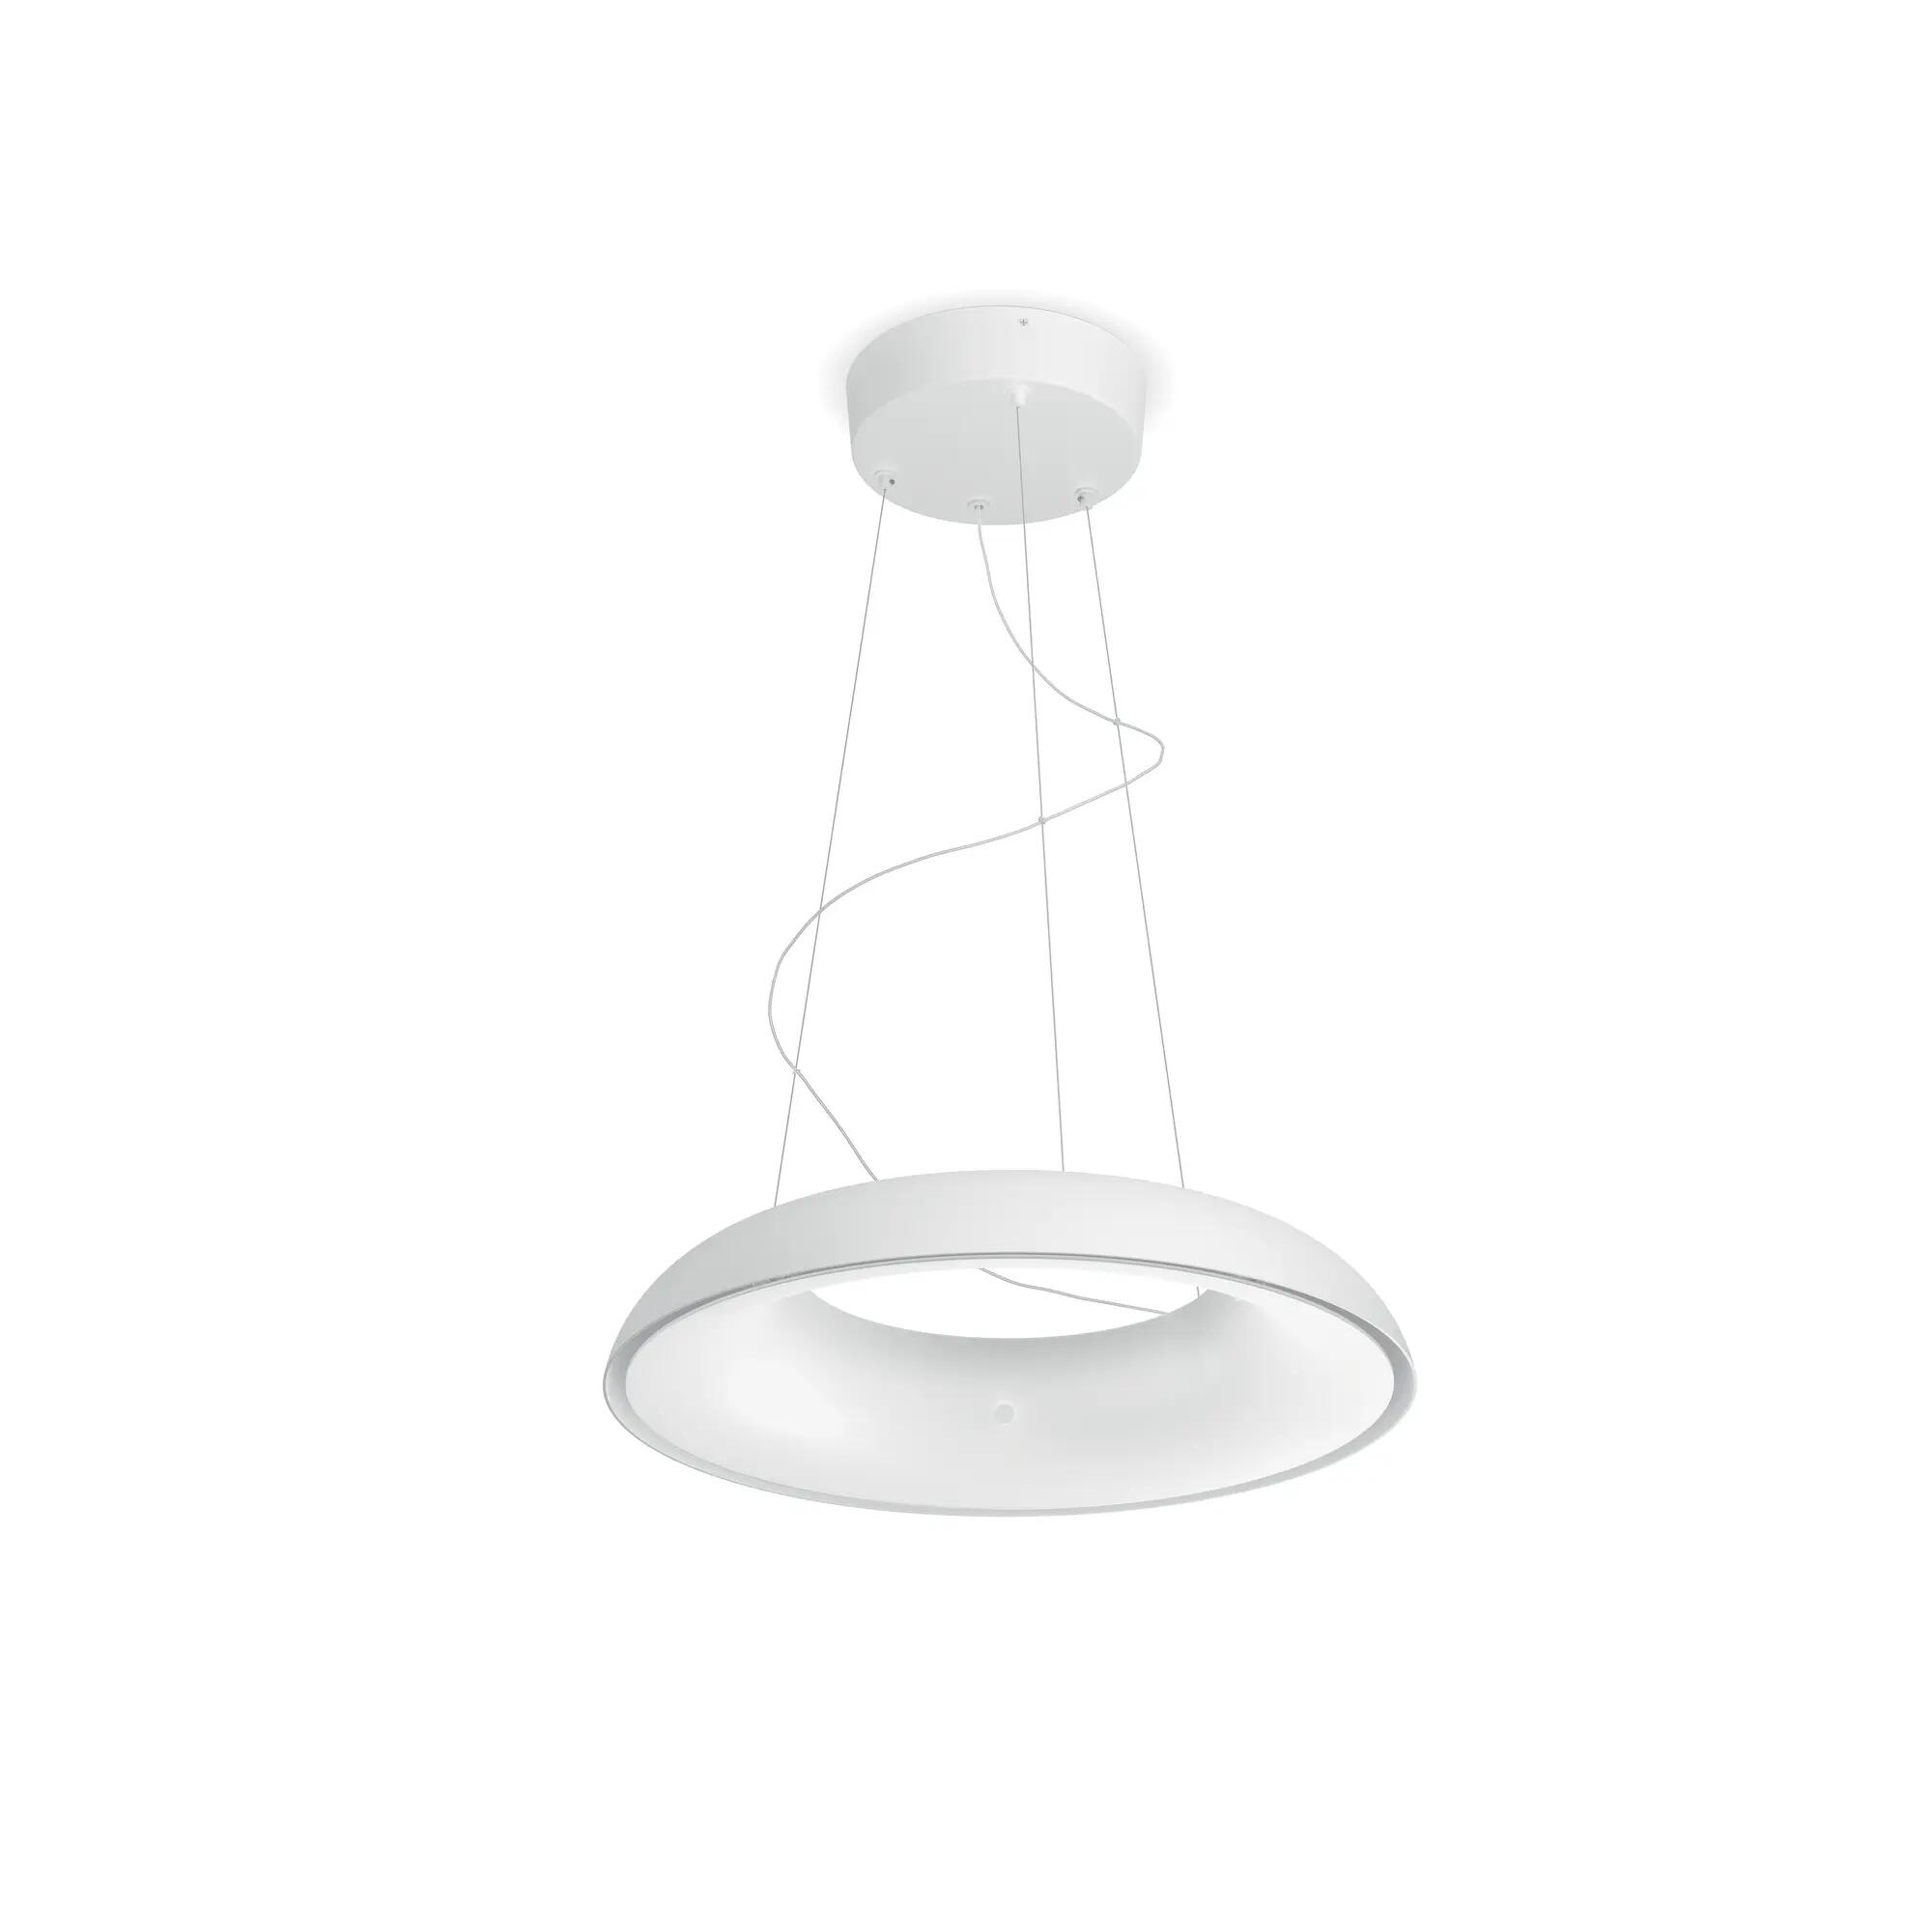 Lampadario Design Amaze + Dimmer Switch bianco, in metallo, D. 43.4 cm, L. 150 cm, PHILIPS HUE - 2